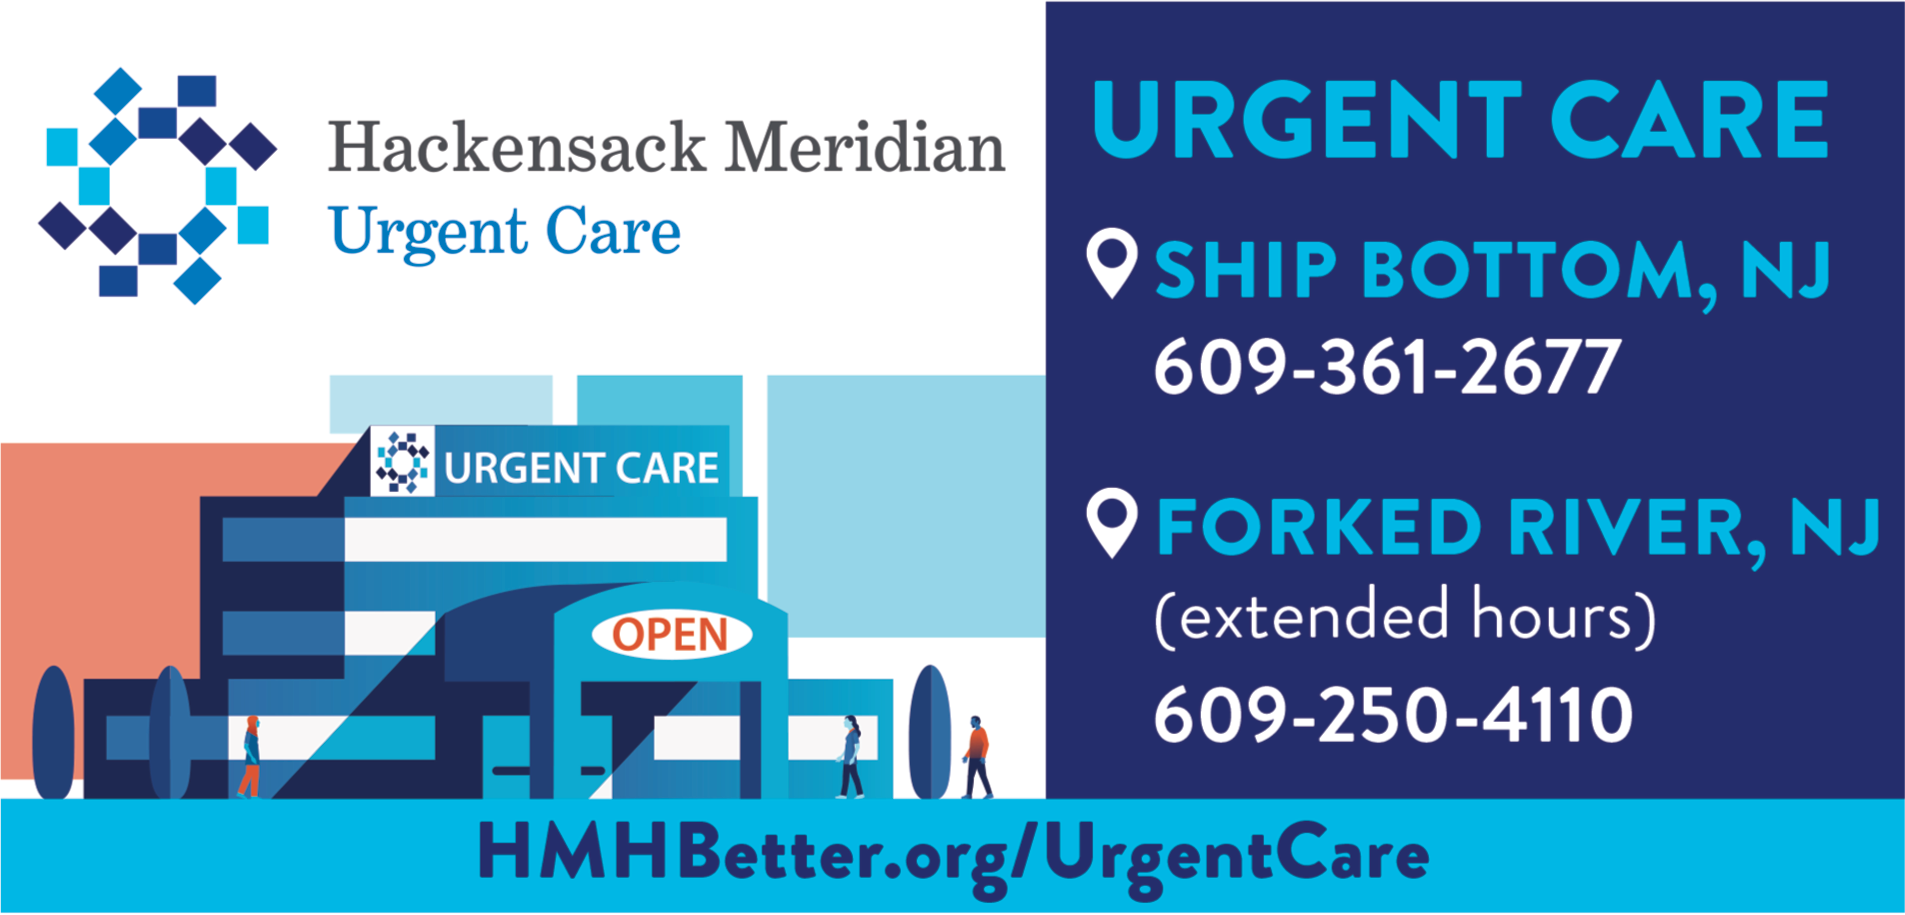 Hackensack Meridian Health Urgent Care Print Ad